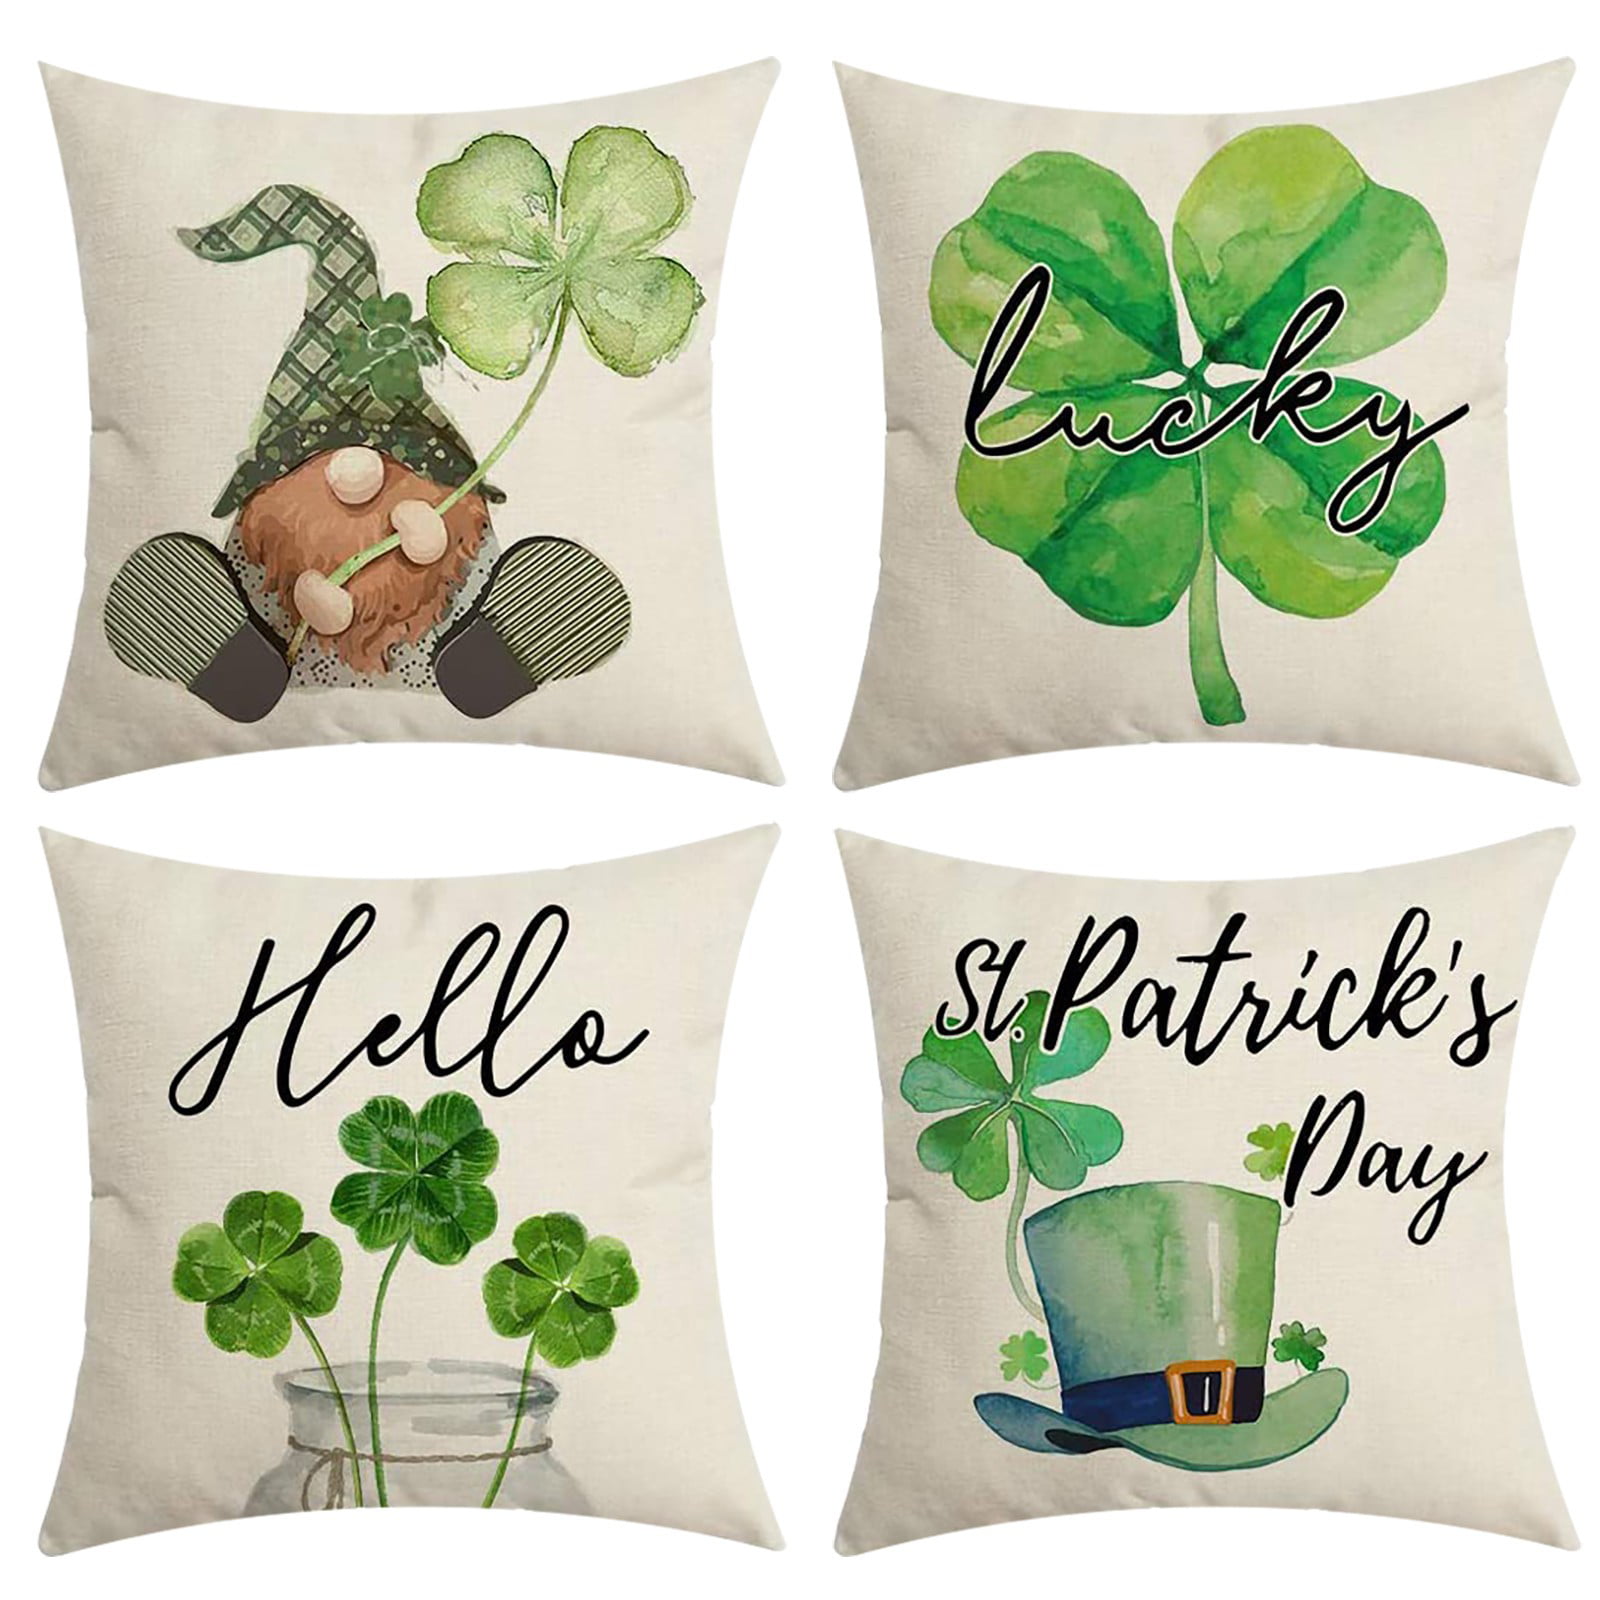 1-Clusters of Shamrocks/St Patrick's Day Standard Size Pillowcase New & Handmade 